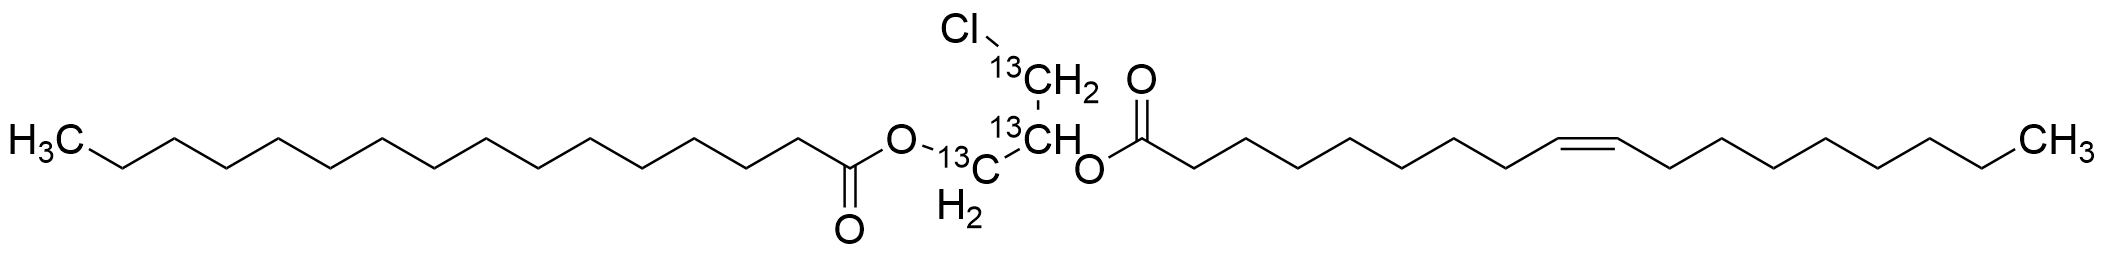 rac 1-Palmitoyl-2-oleoyl-3-chloropropanediol-13C3